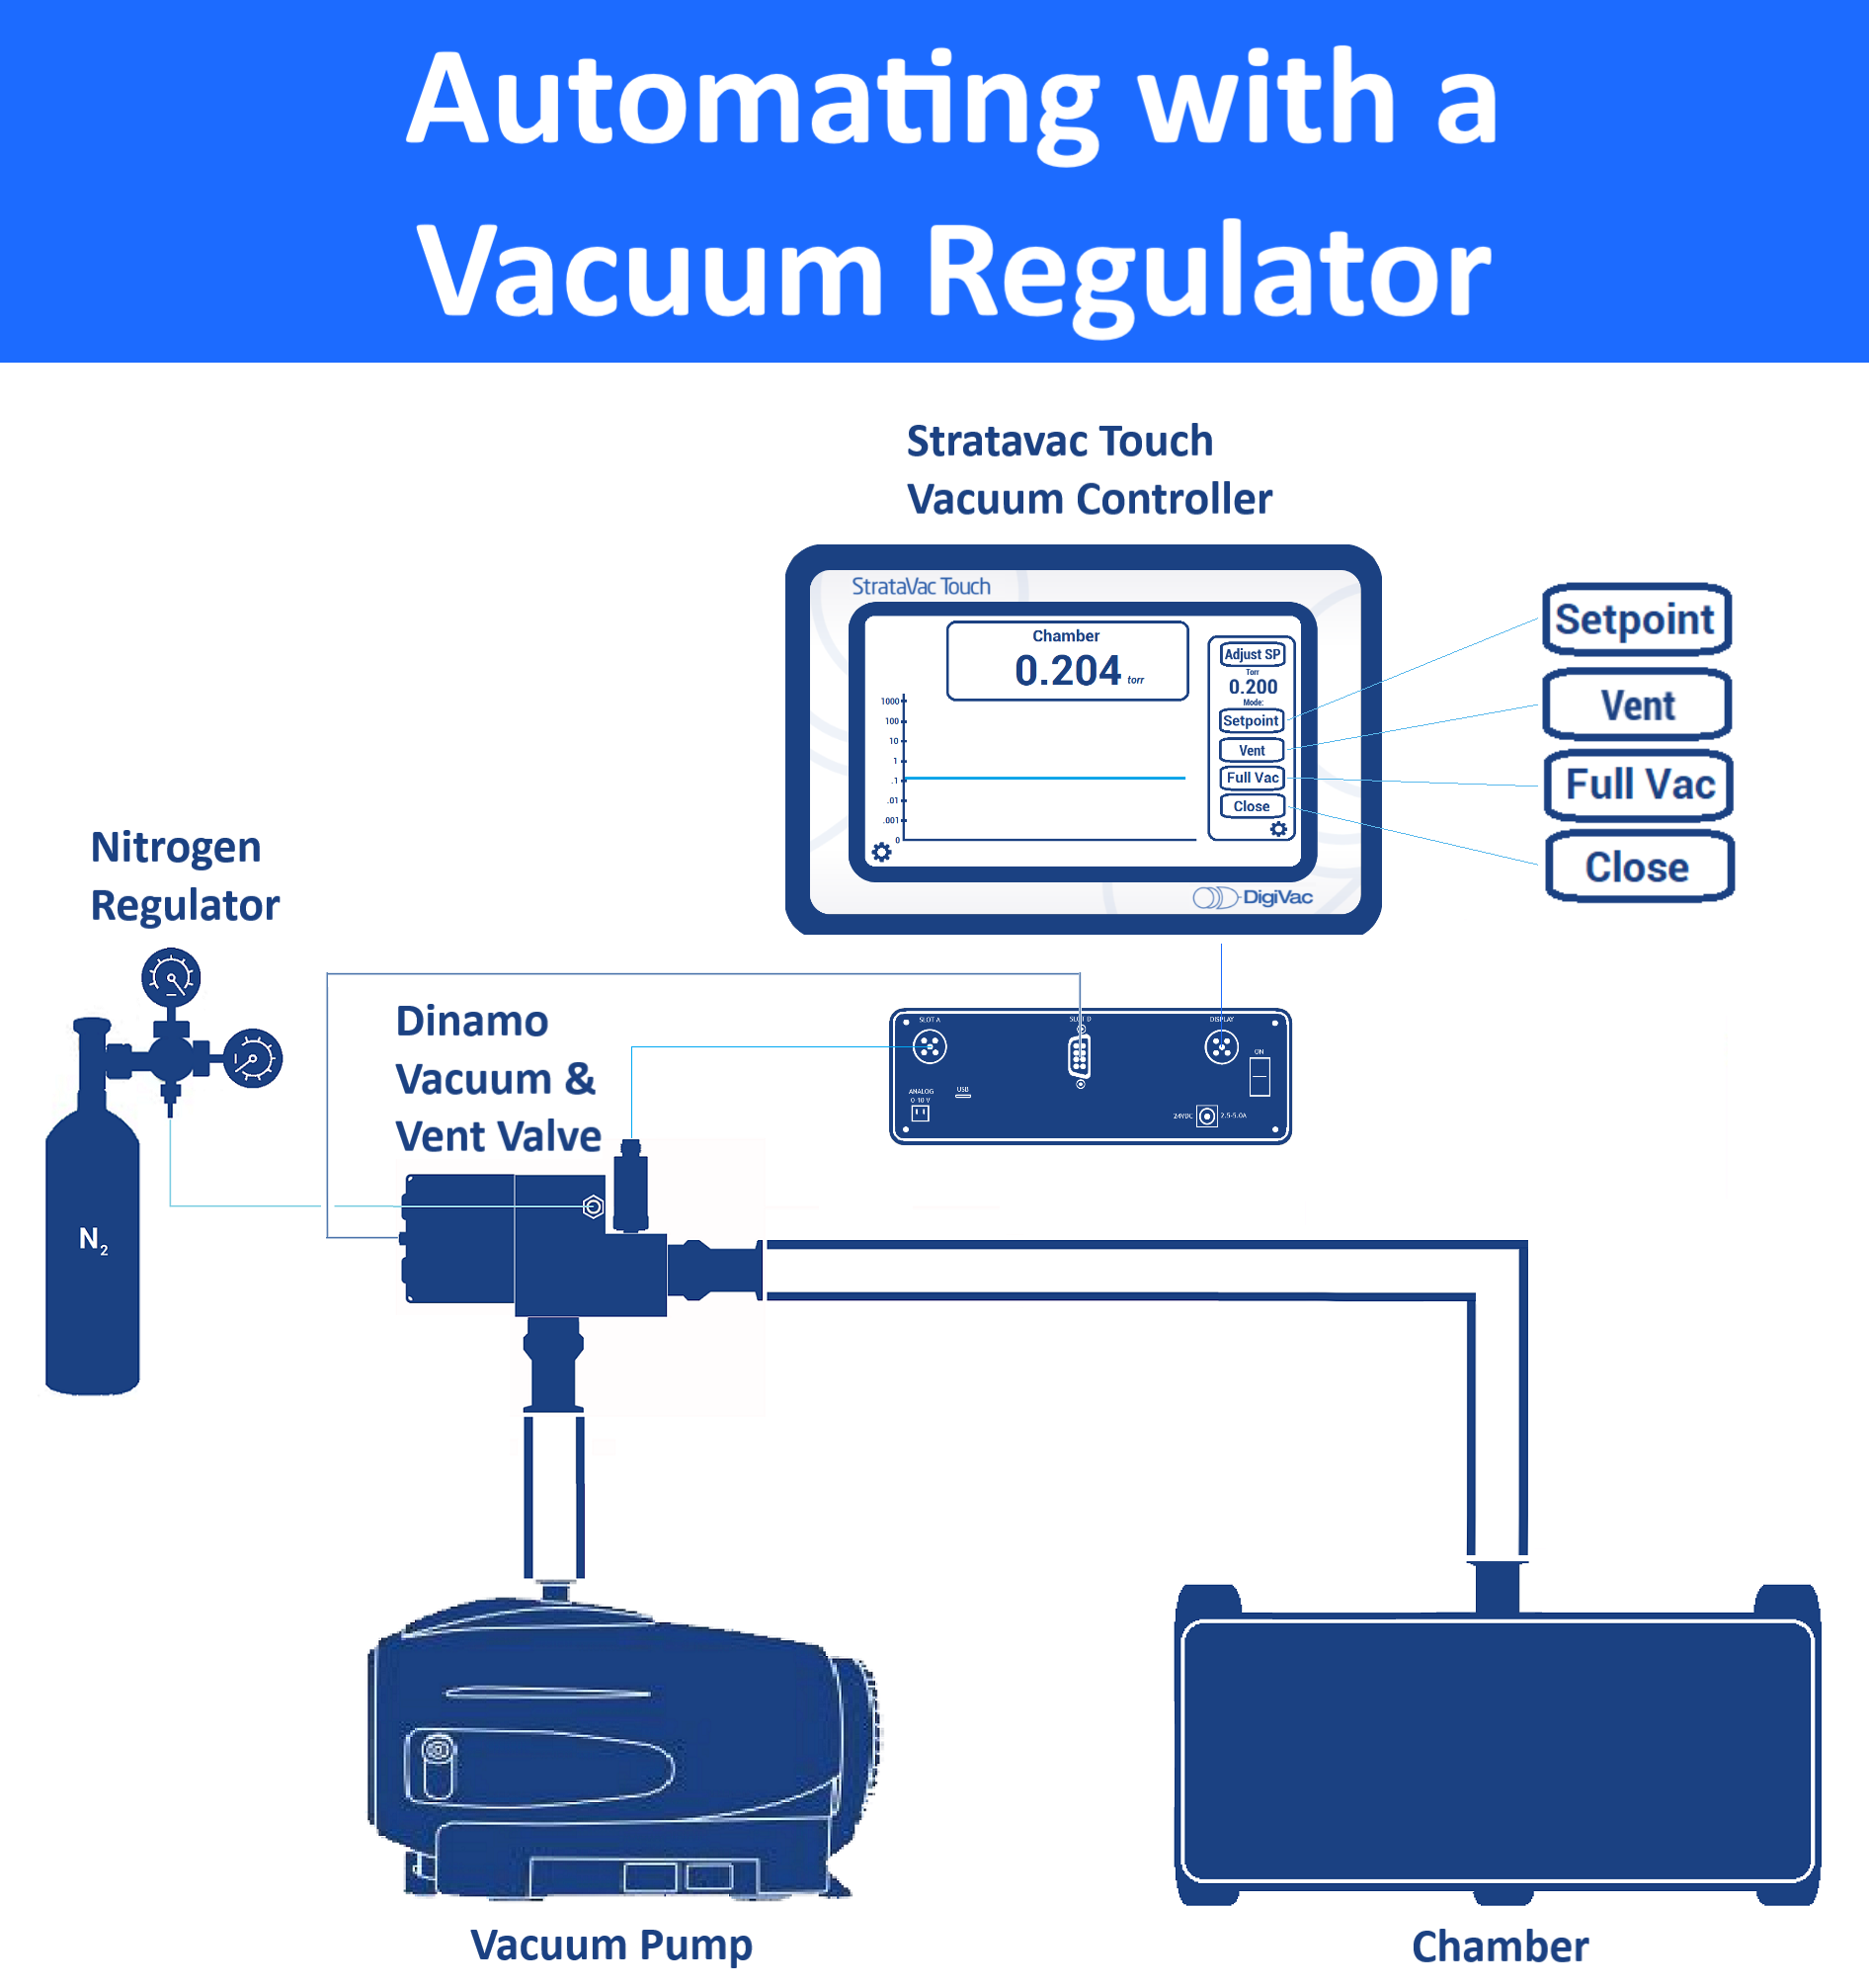 The Benefits of Using a Vacuum Regulator